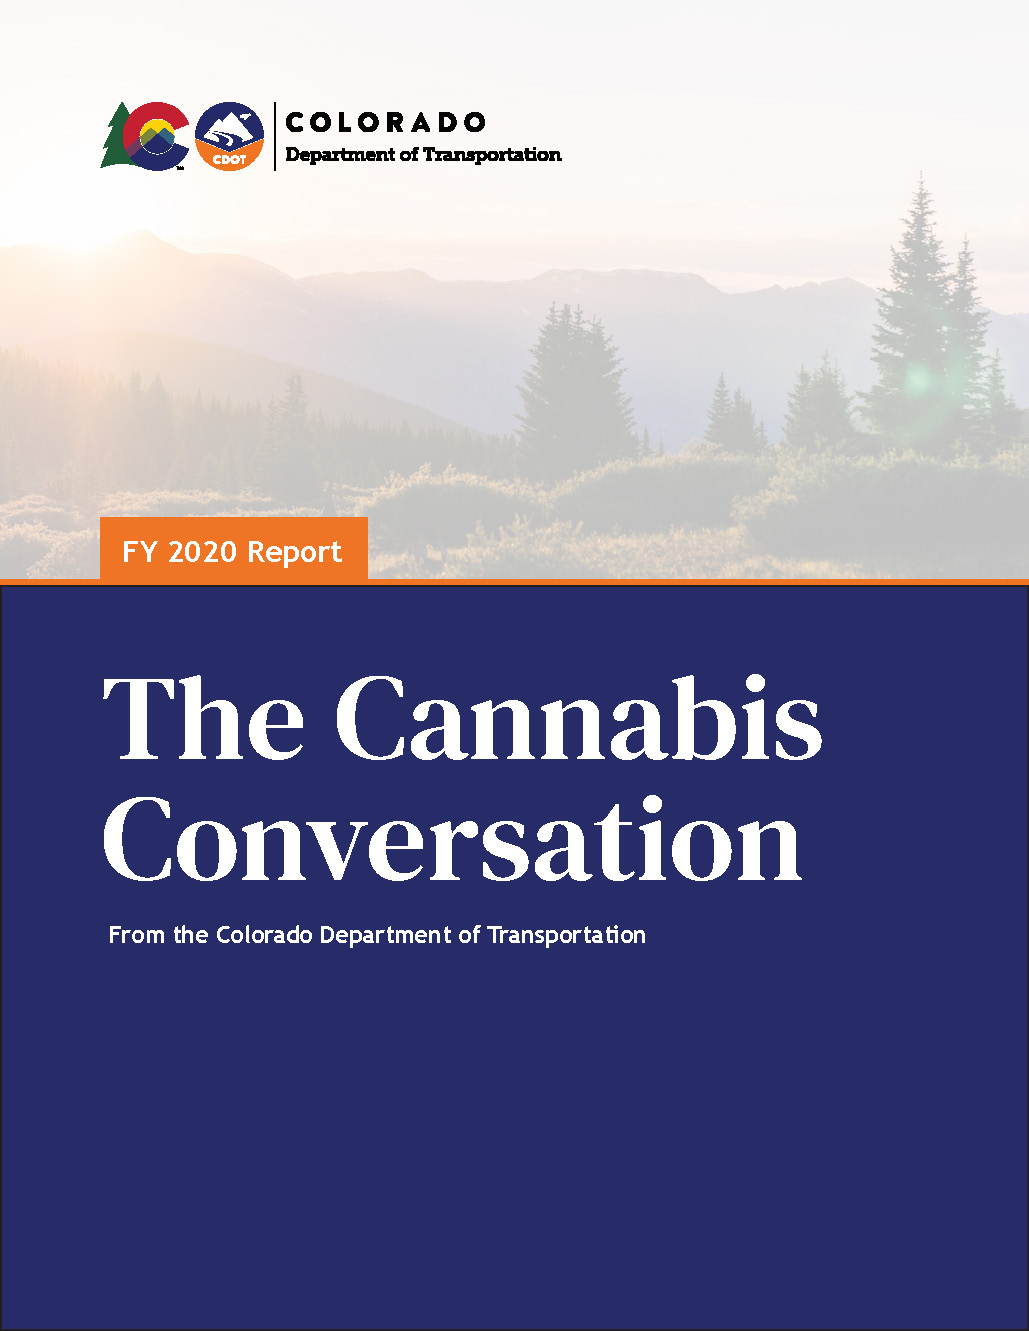 cannabis-conversation-report_cover.jpg detail image